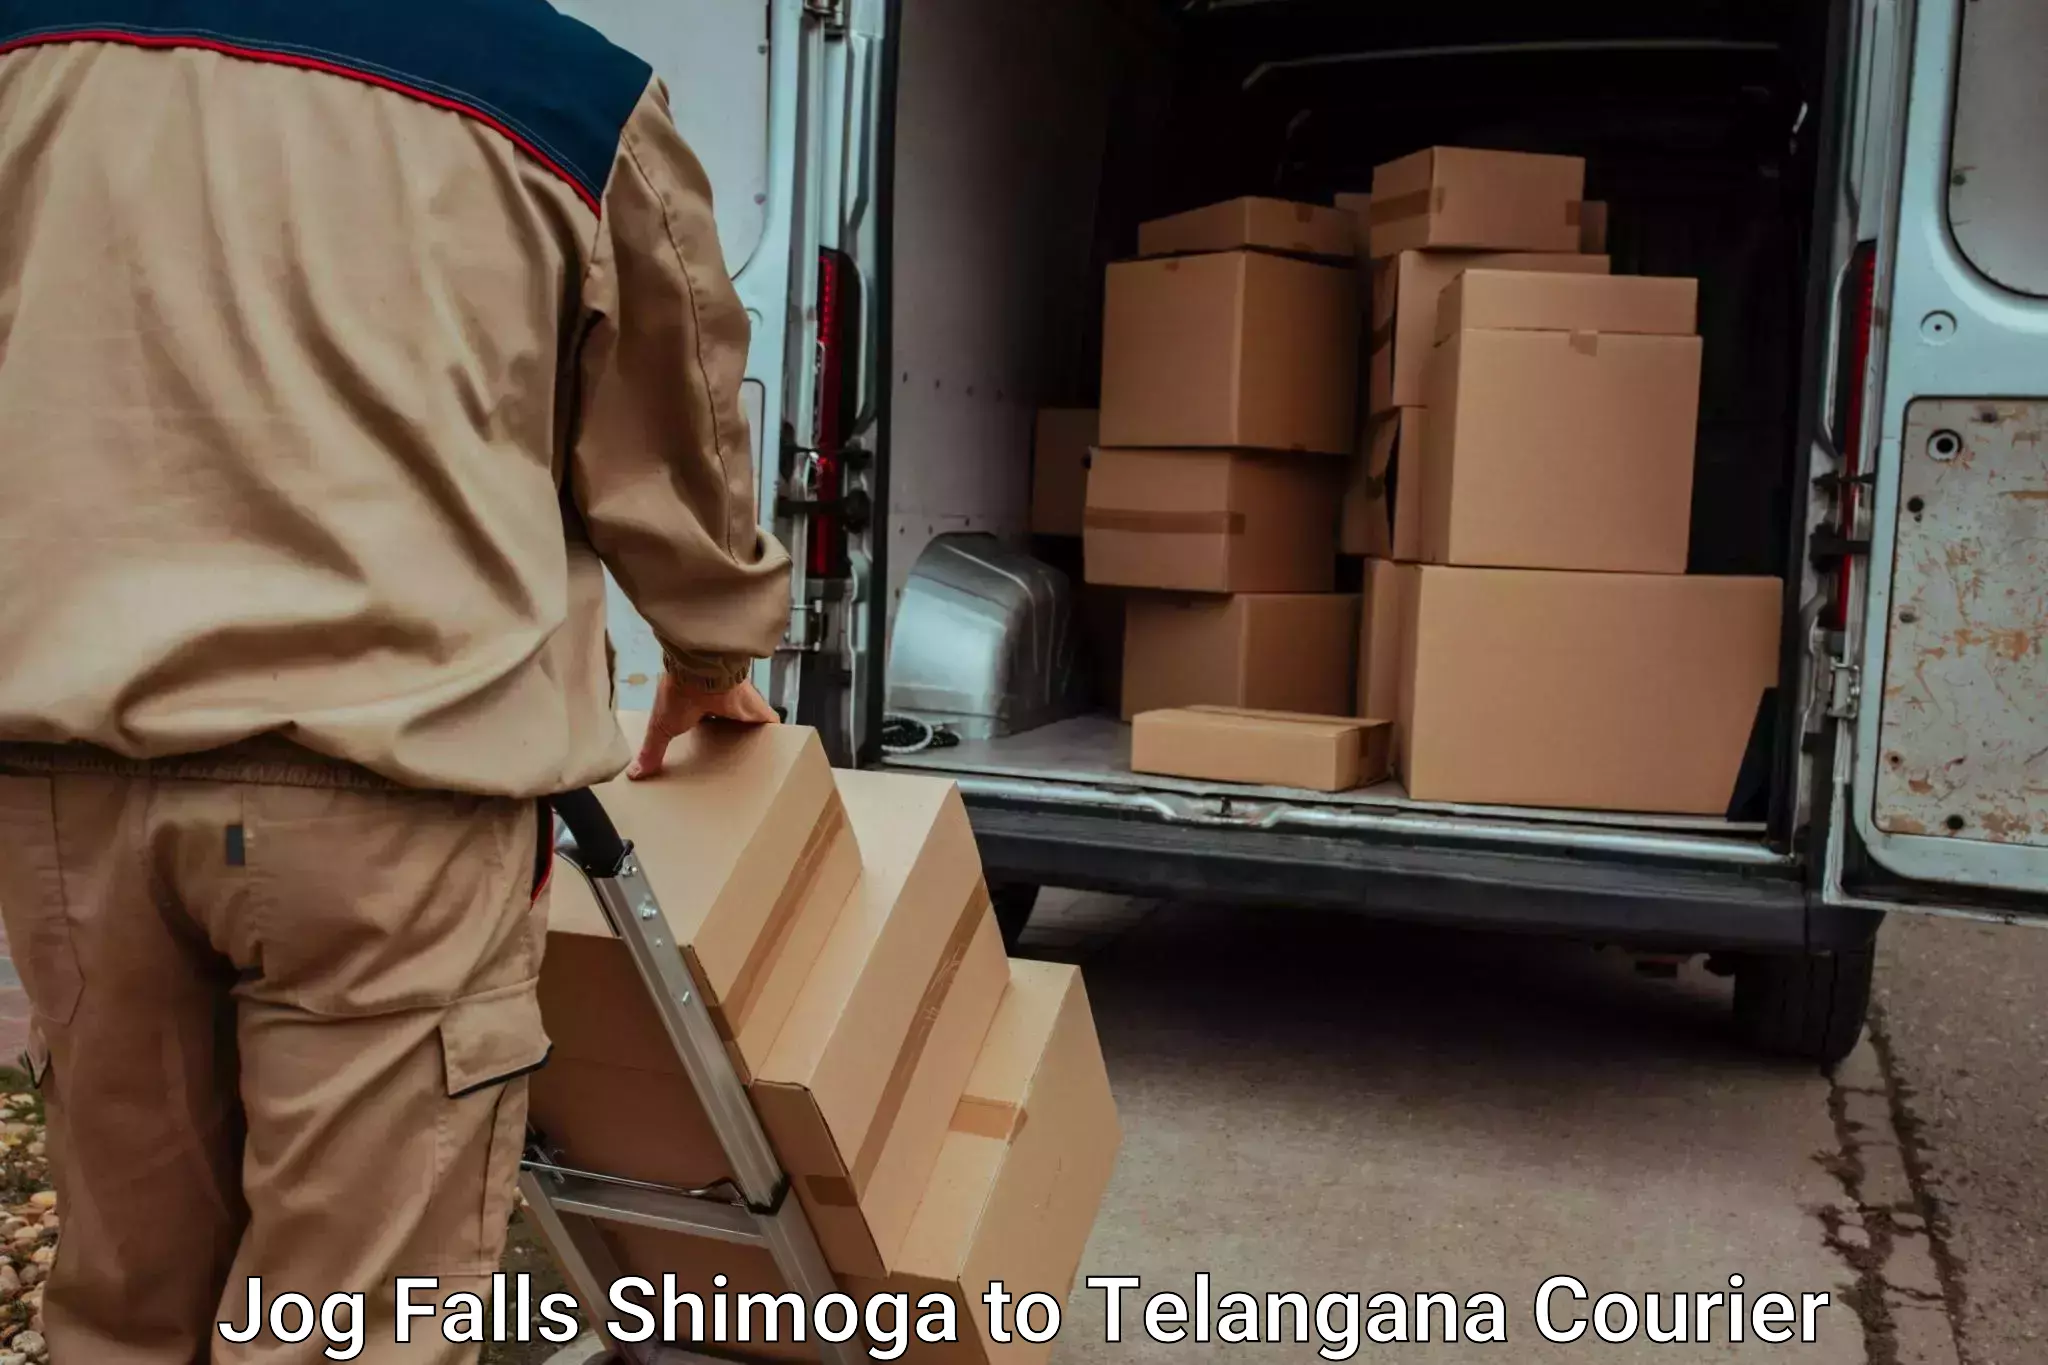 Household moving experts Jog Falls Shimoga to Hyderabad